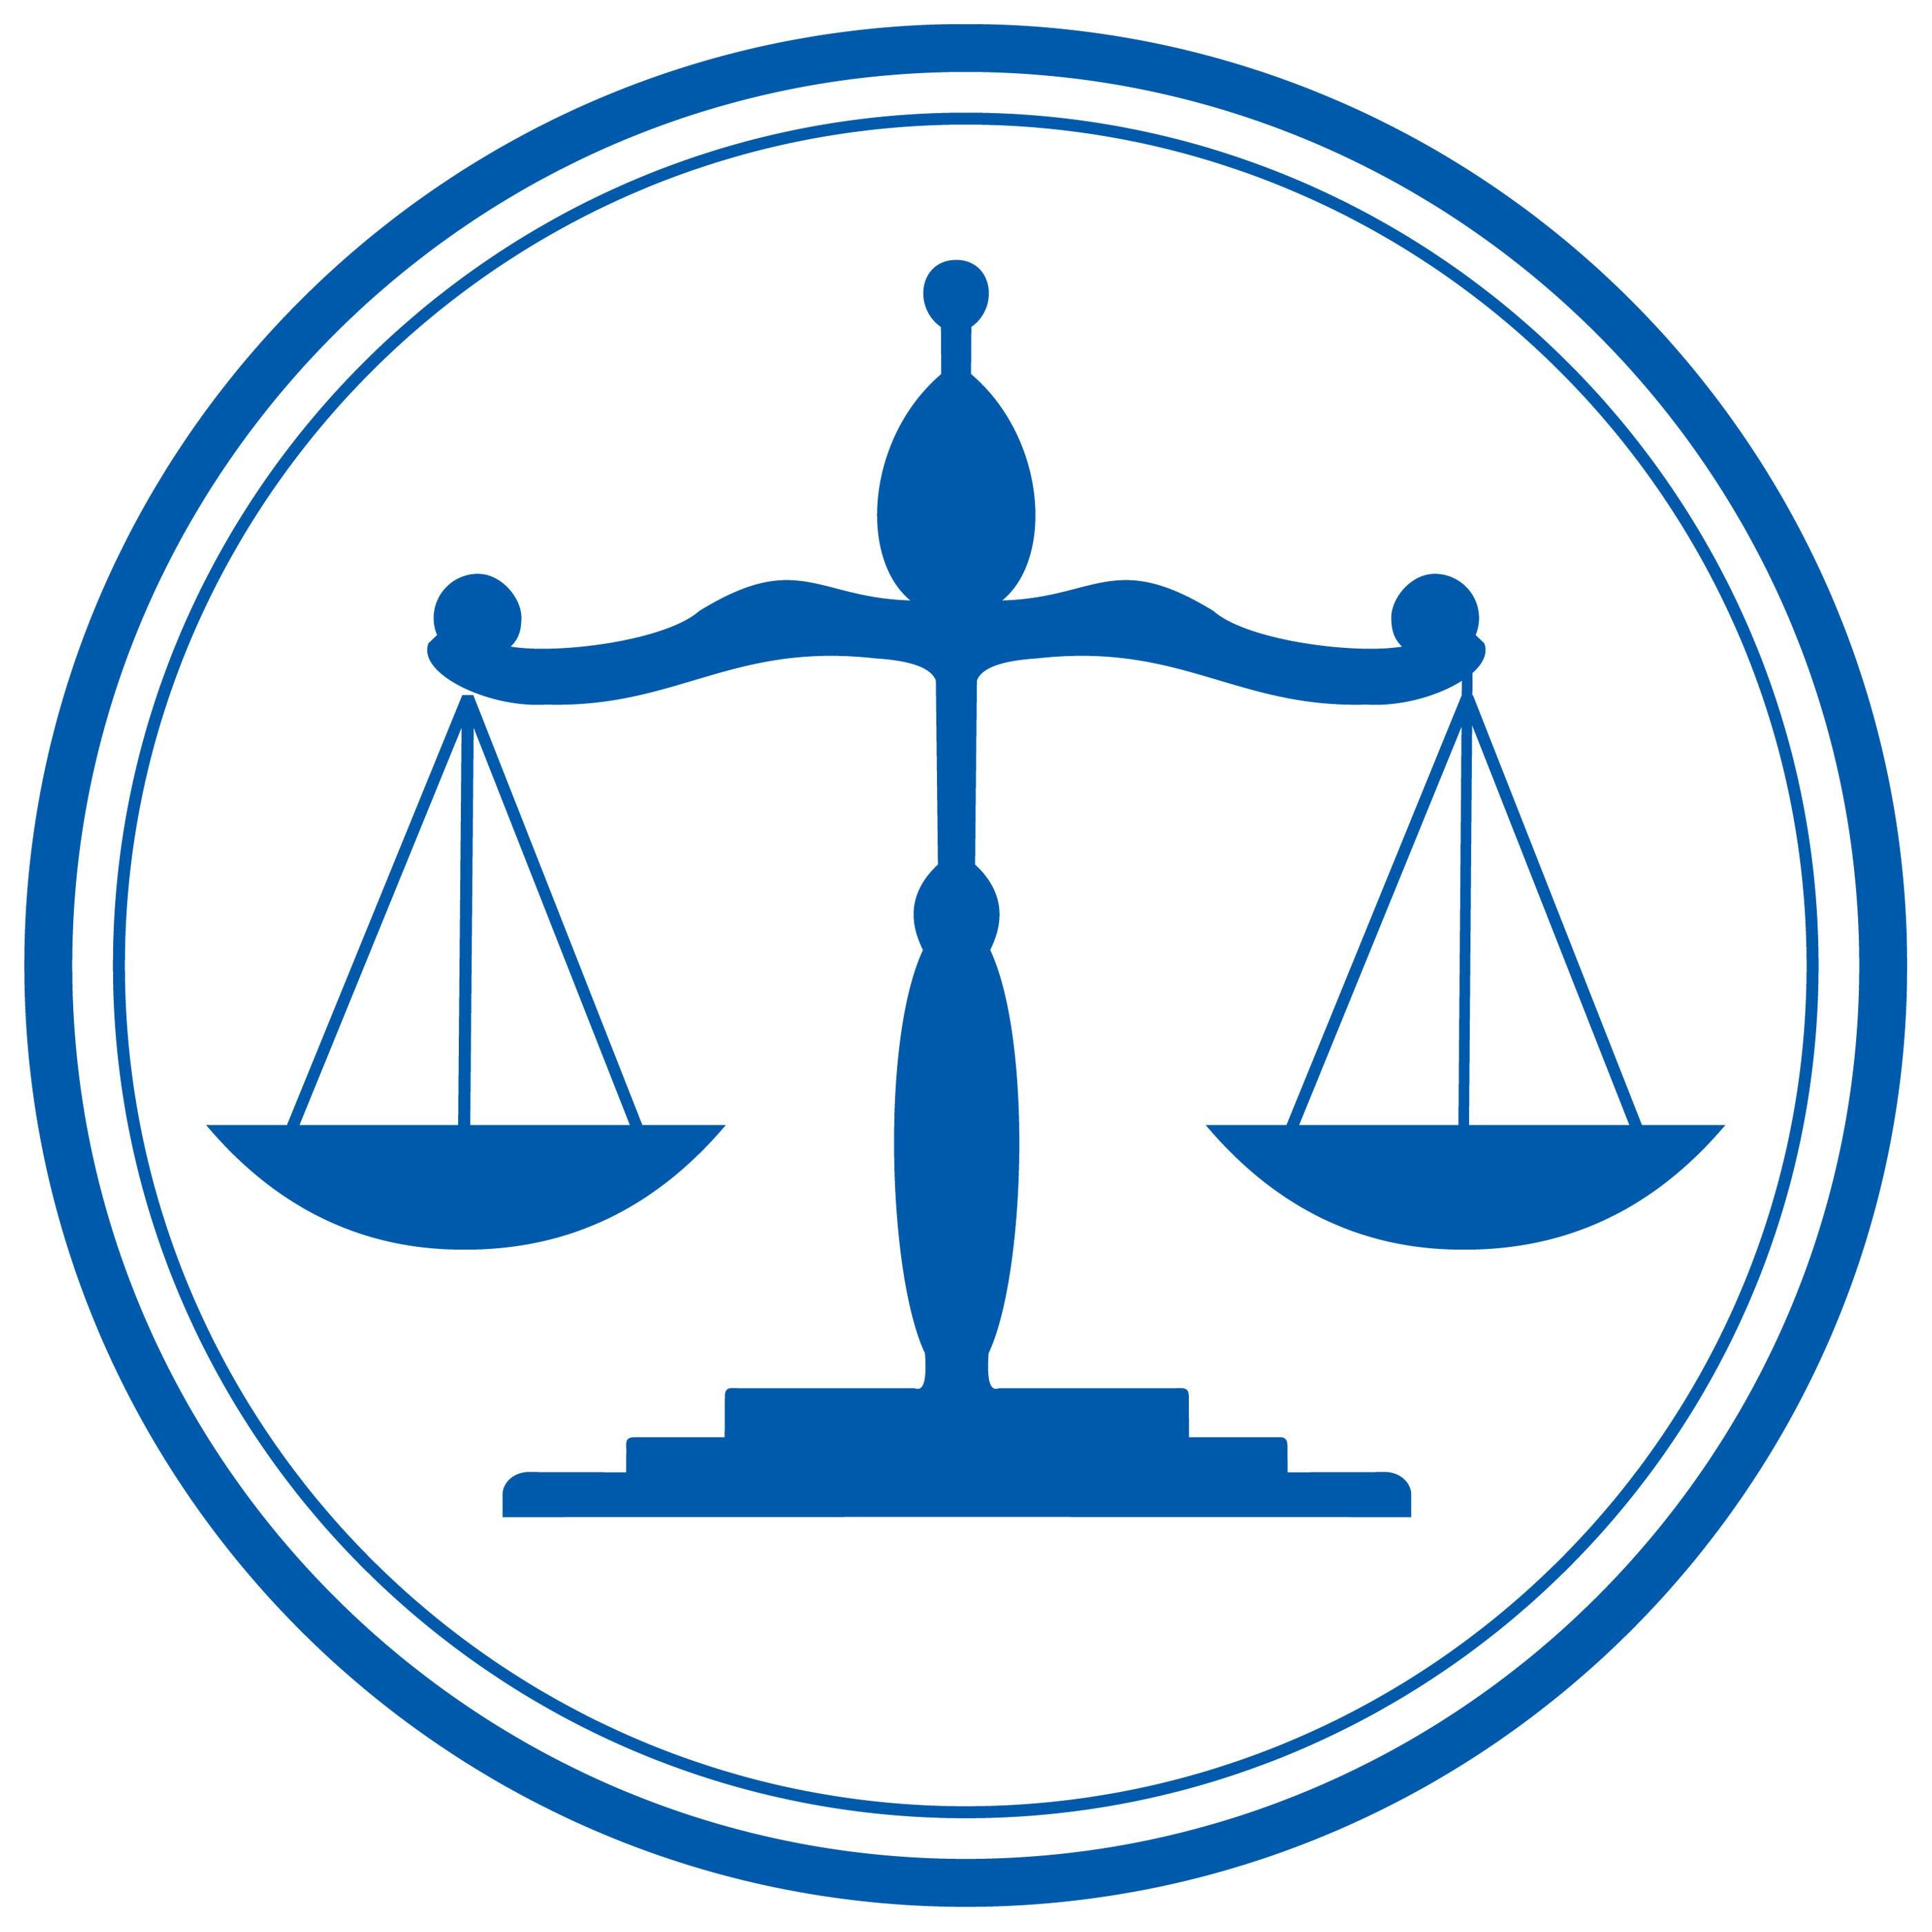 scales of justice | Logo Design Inspiration | Pinterest